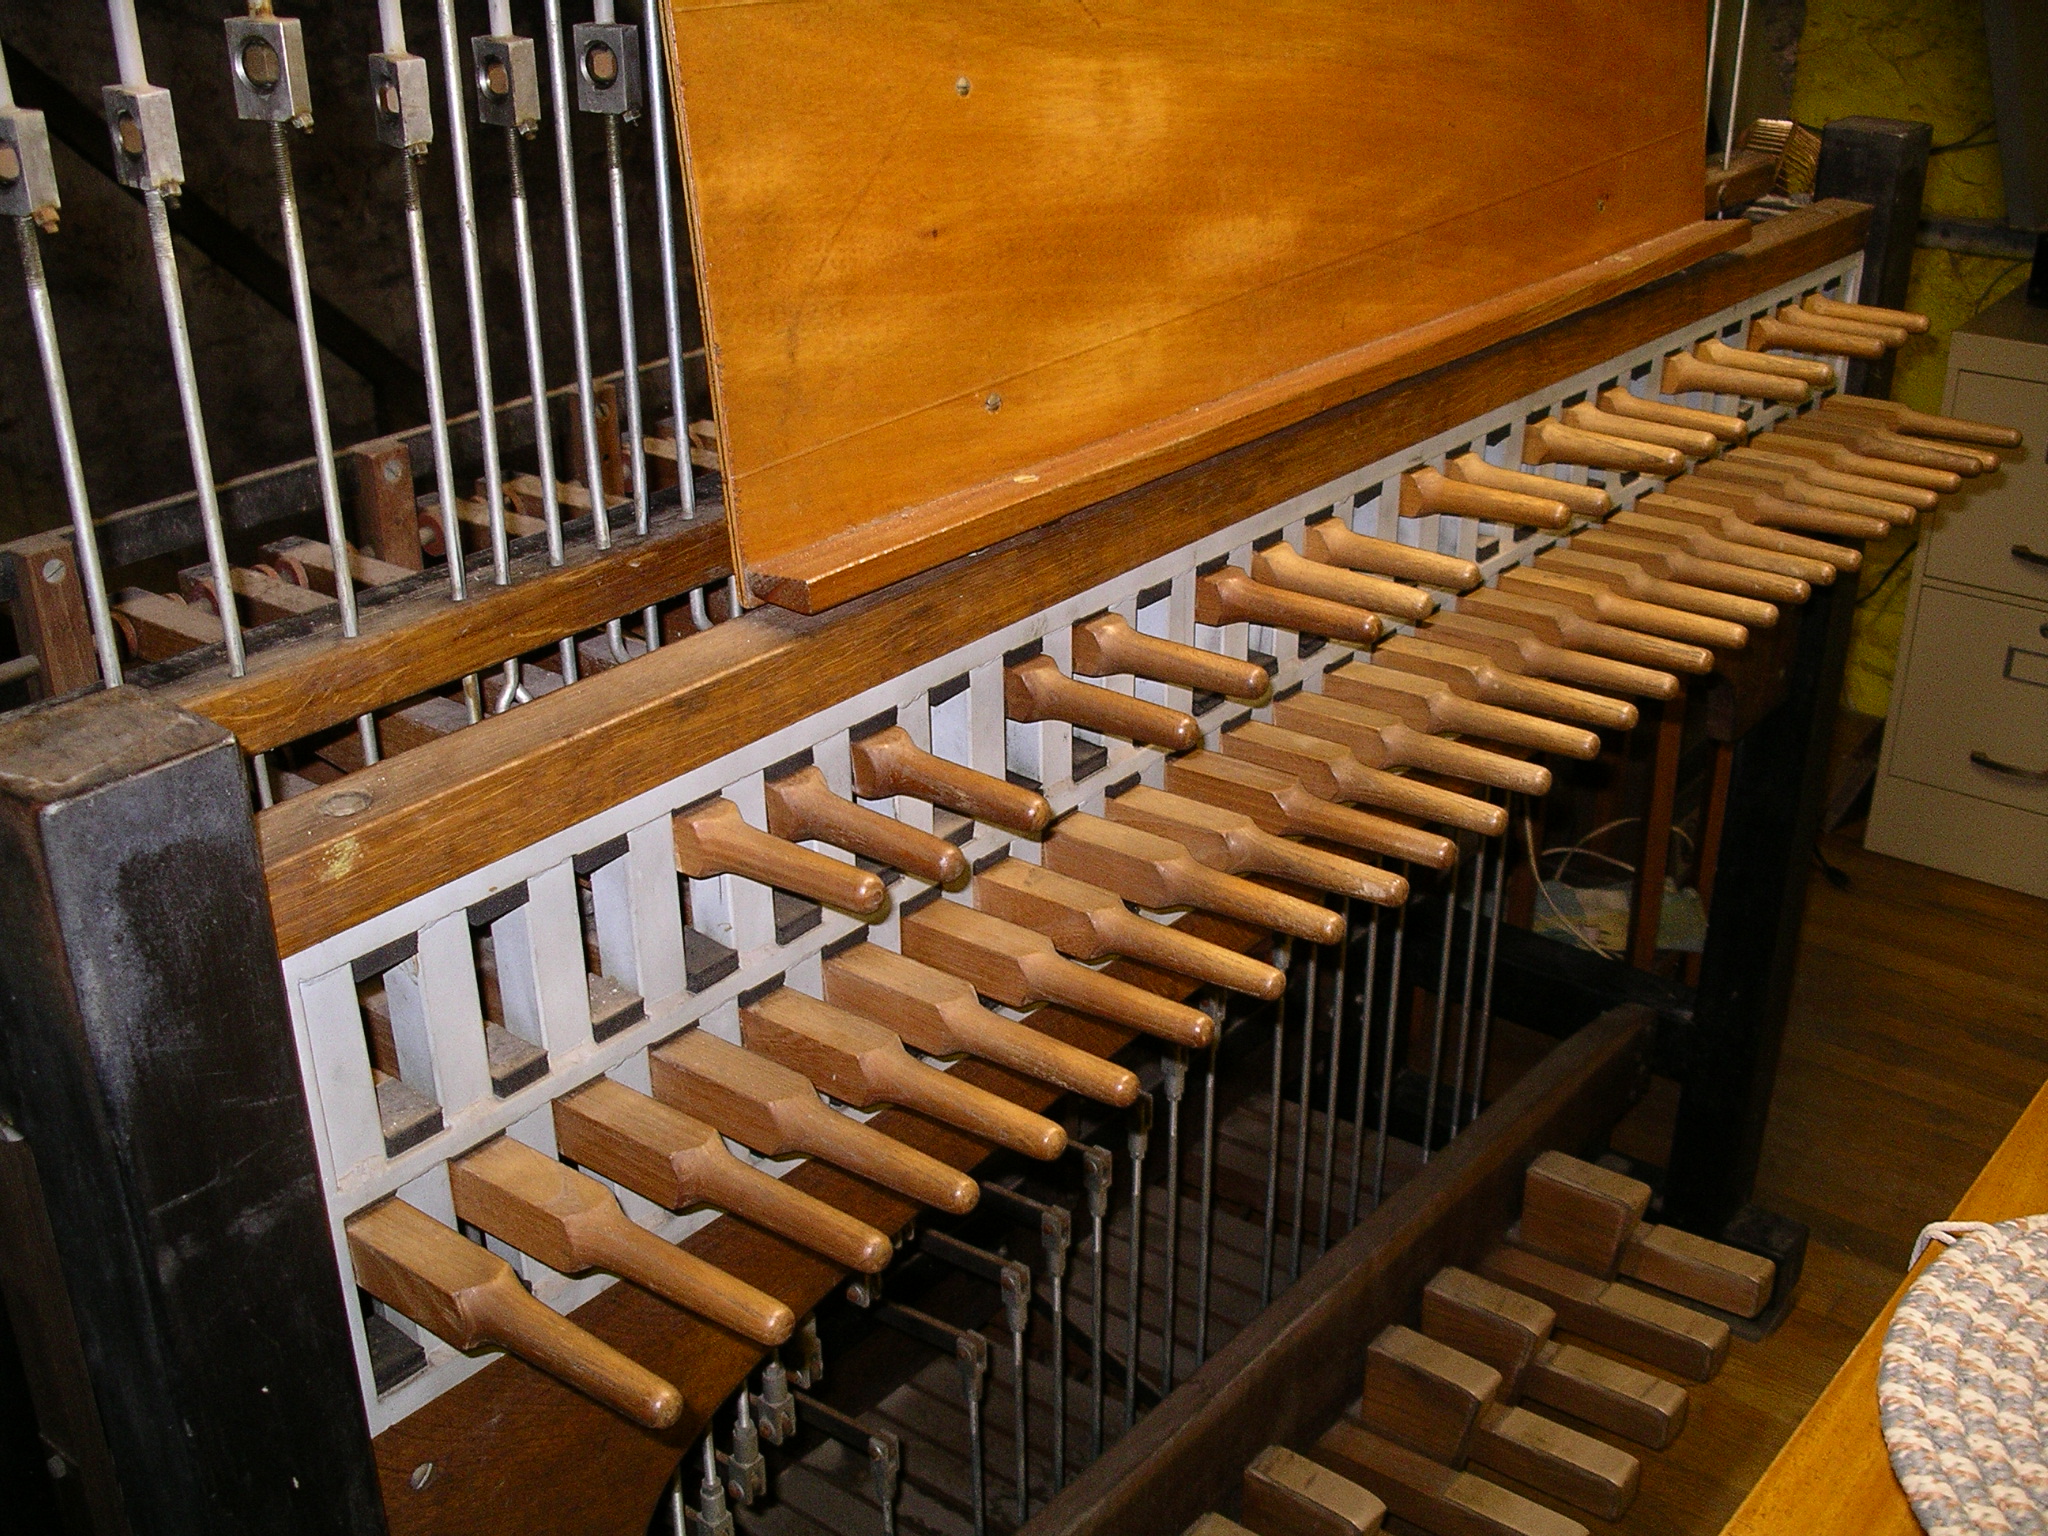 IMGP3050 The carillon